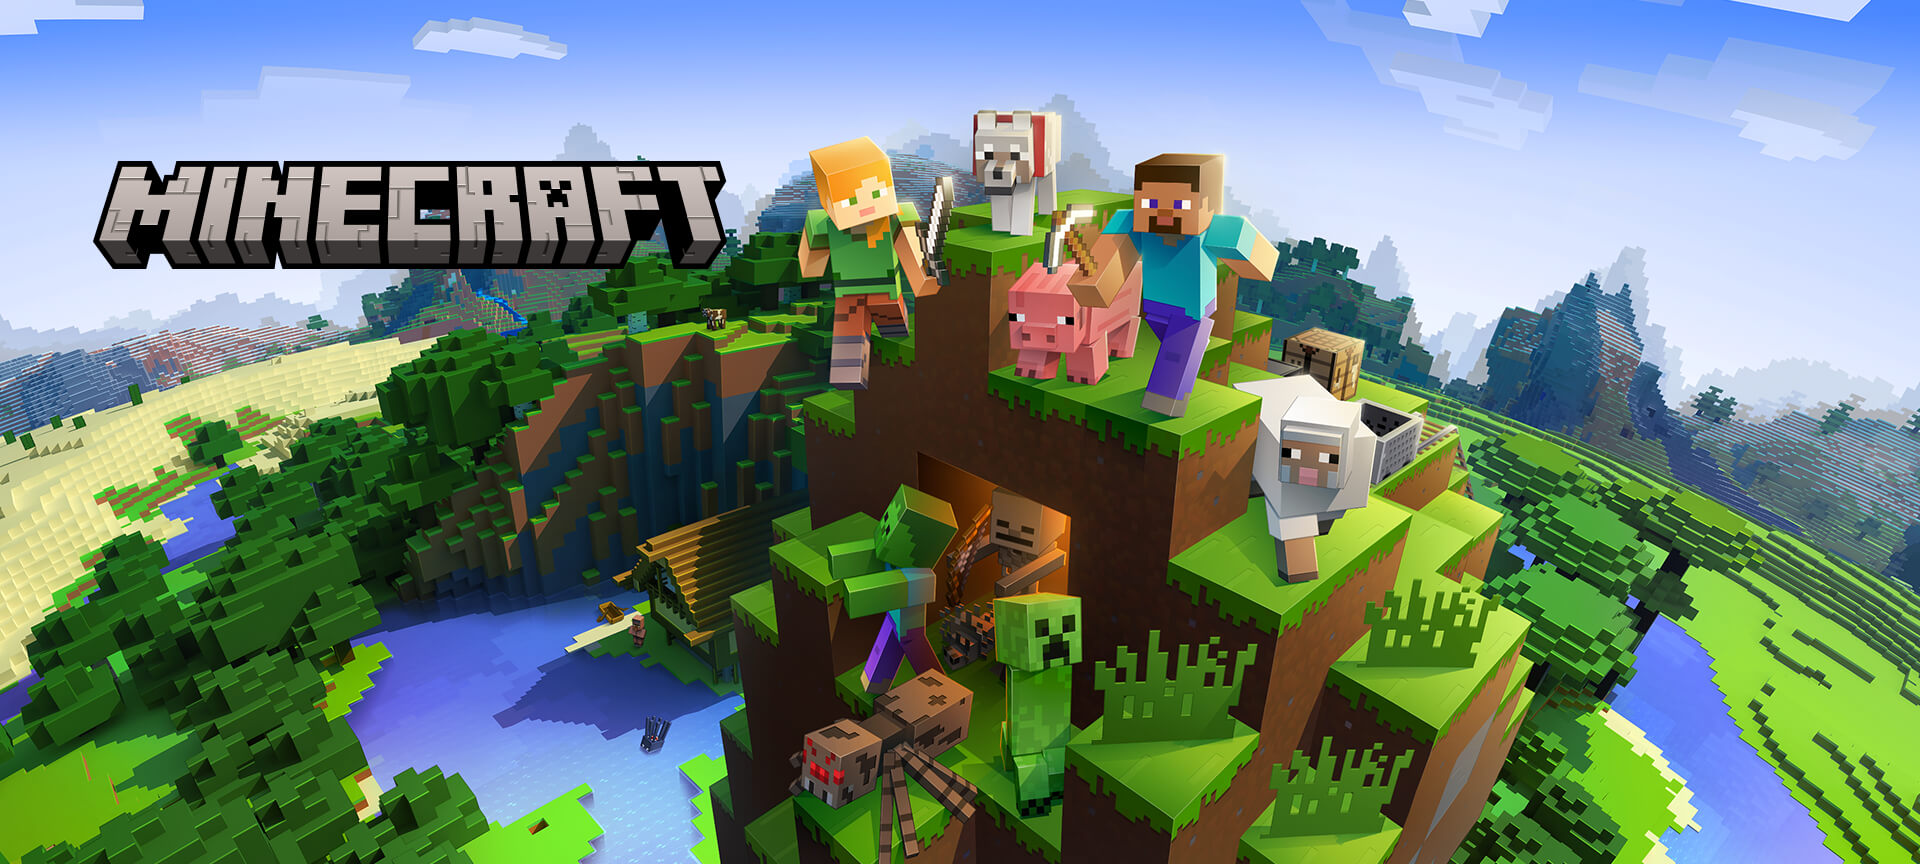 『Minecraft: Java & Bedrock Edition for PC』バンドルPC